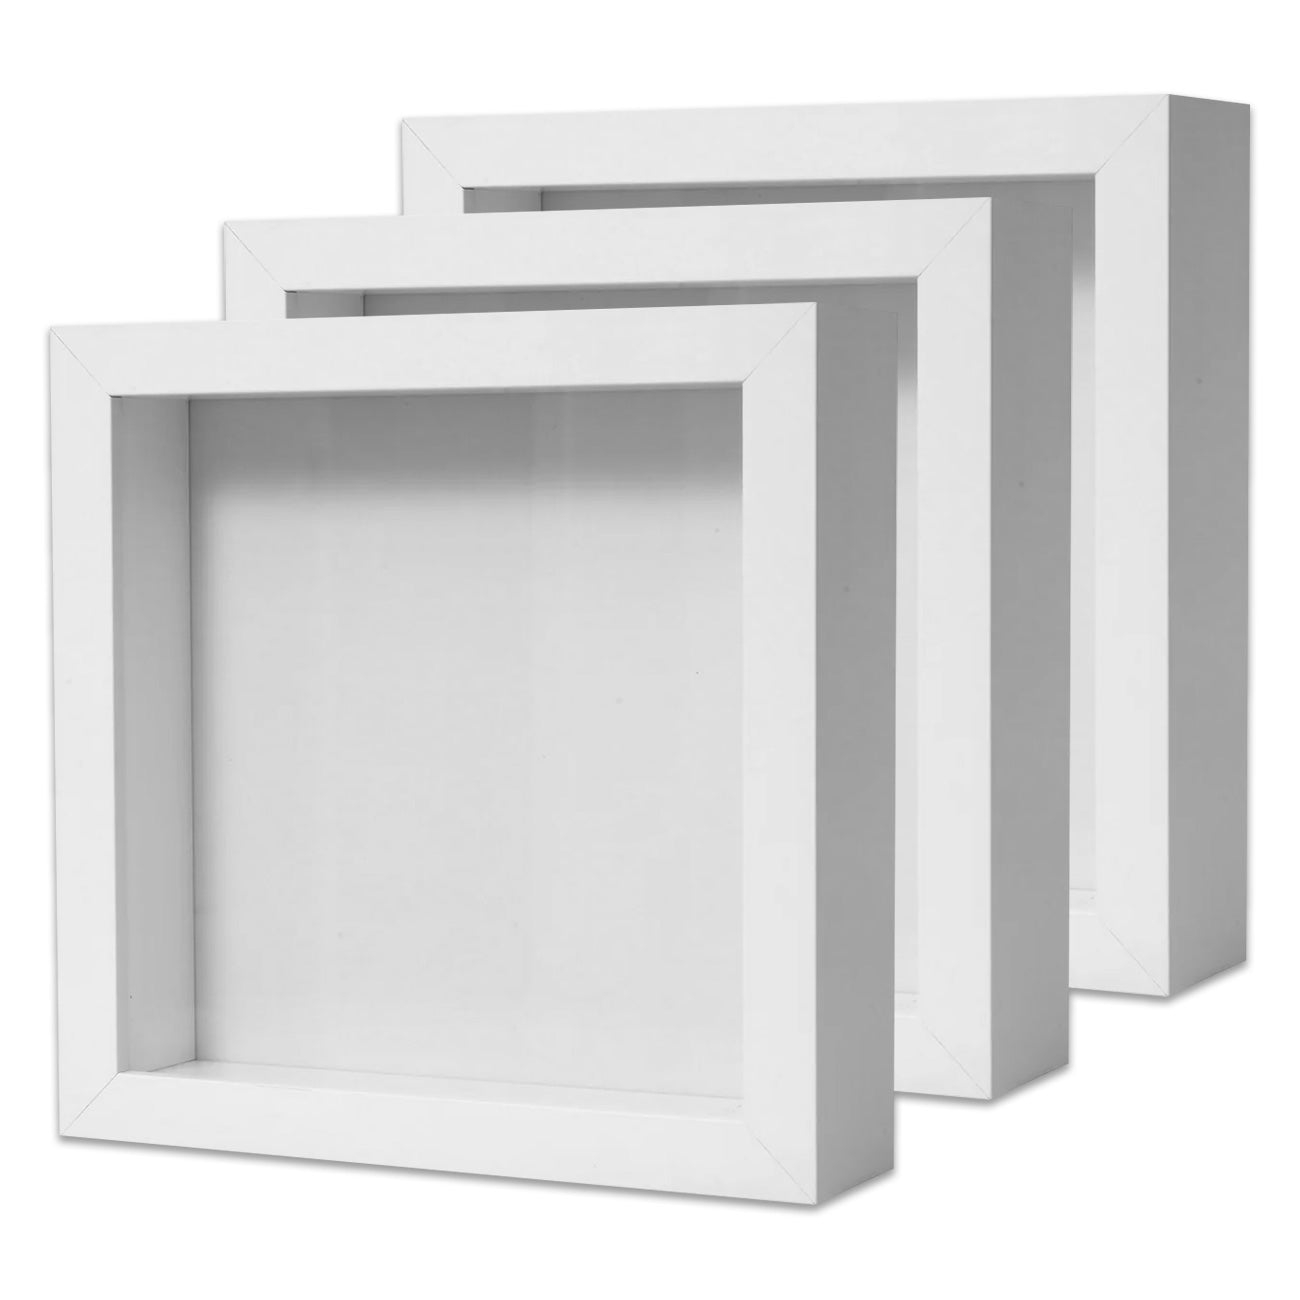 8x8 Shadow Box Frame White, 1.125 inches Deep Real Wood Rustic Shadowbox  Displa